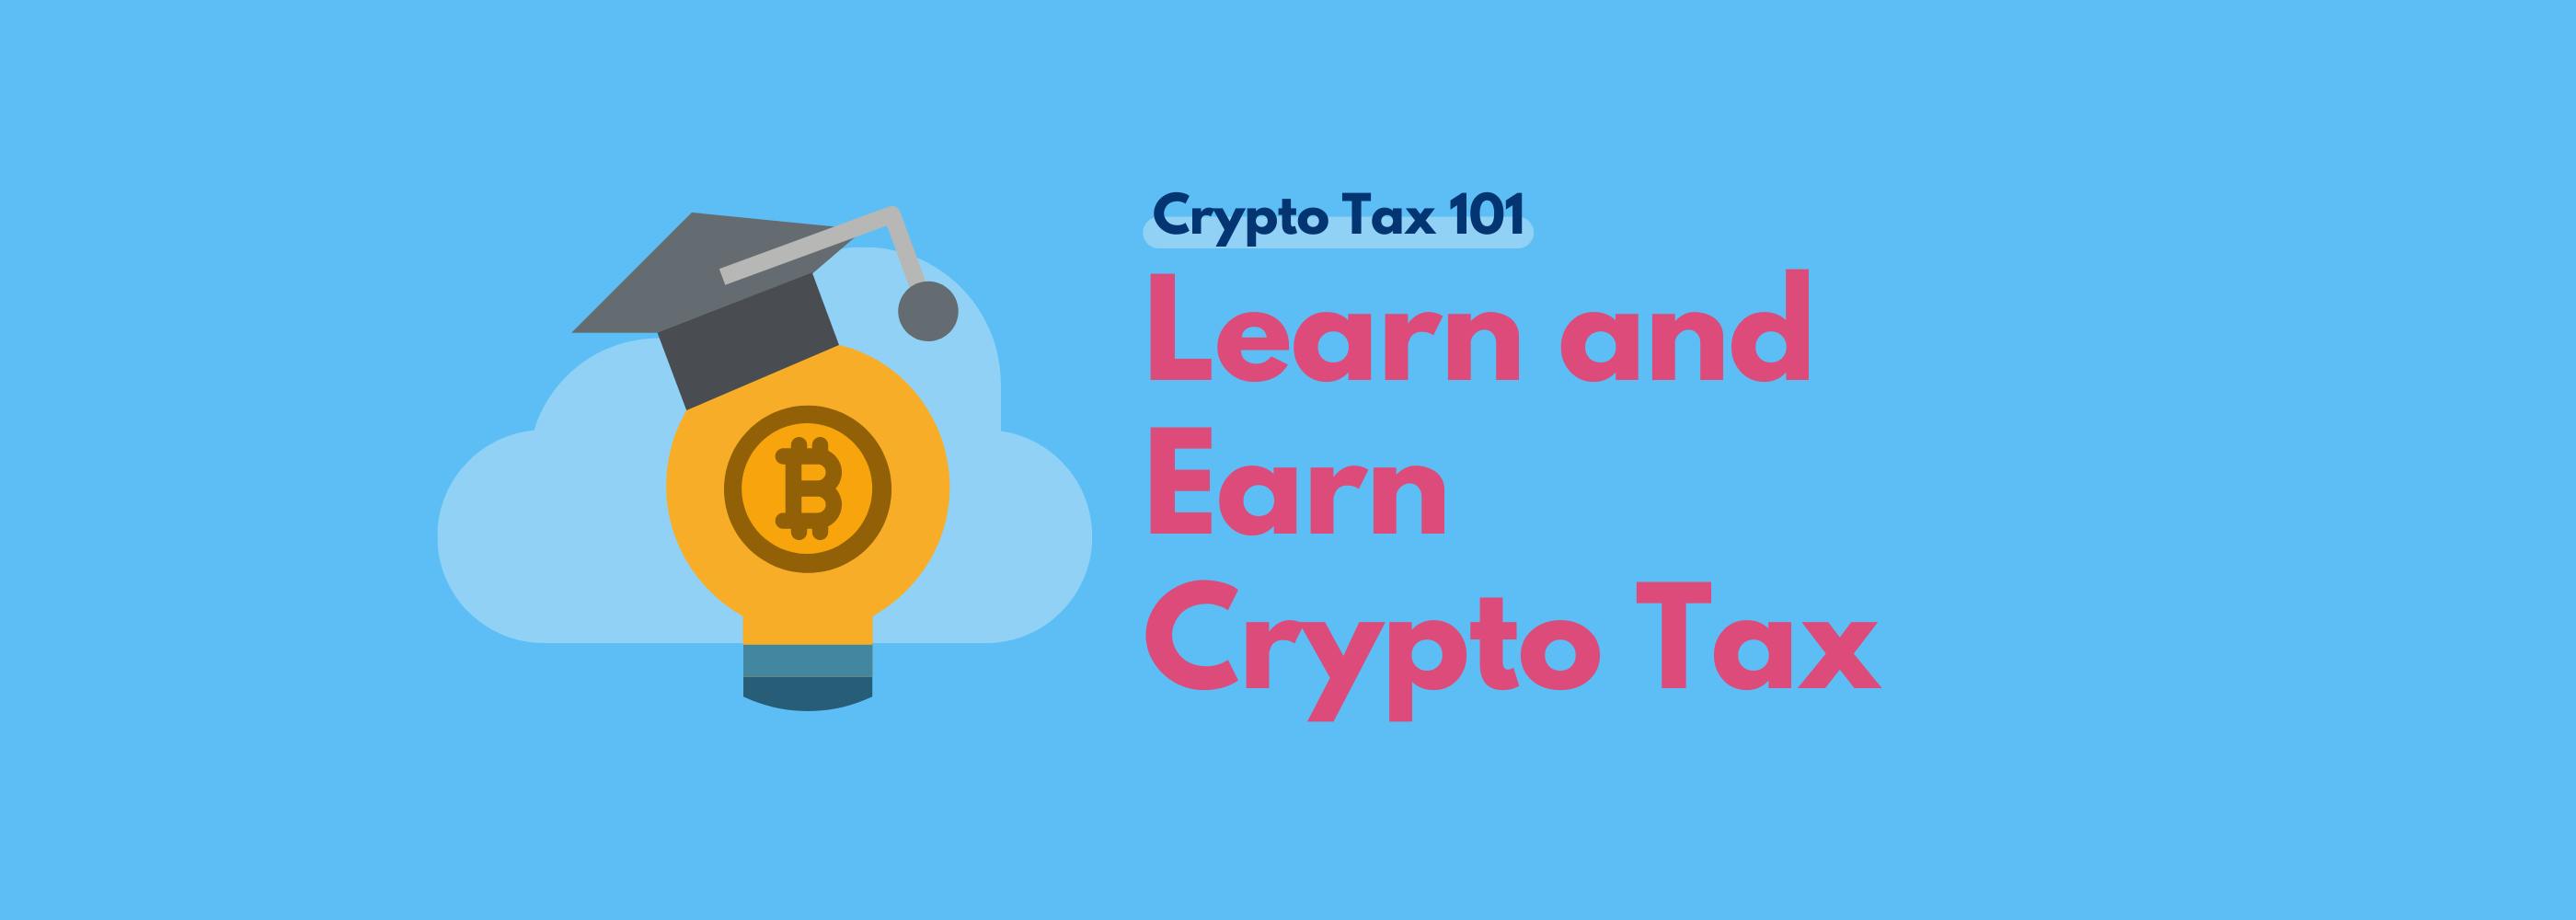 Learn and earn crypto